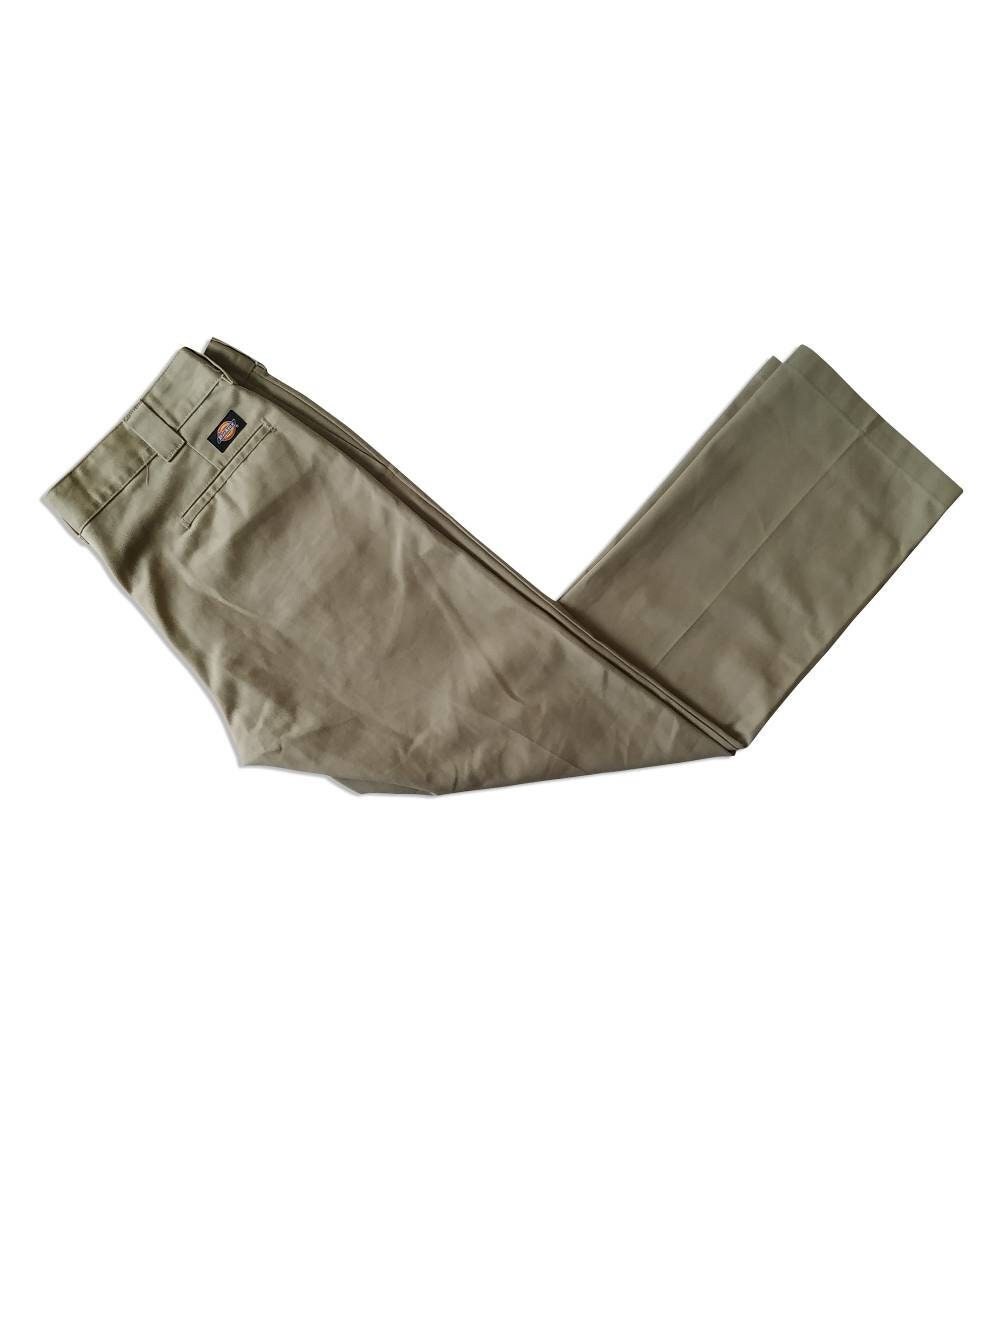 Vintage Dickies 874 Original Fit 90s Utility Pants Tan Khaki Size 36 X 30 